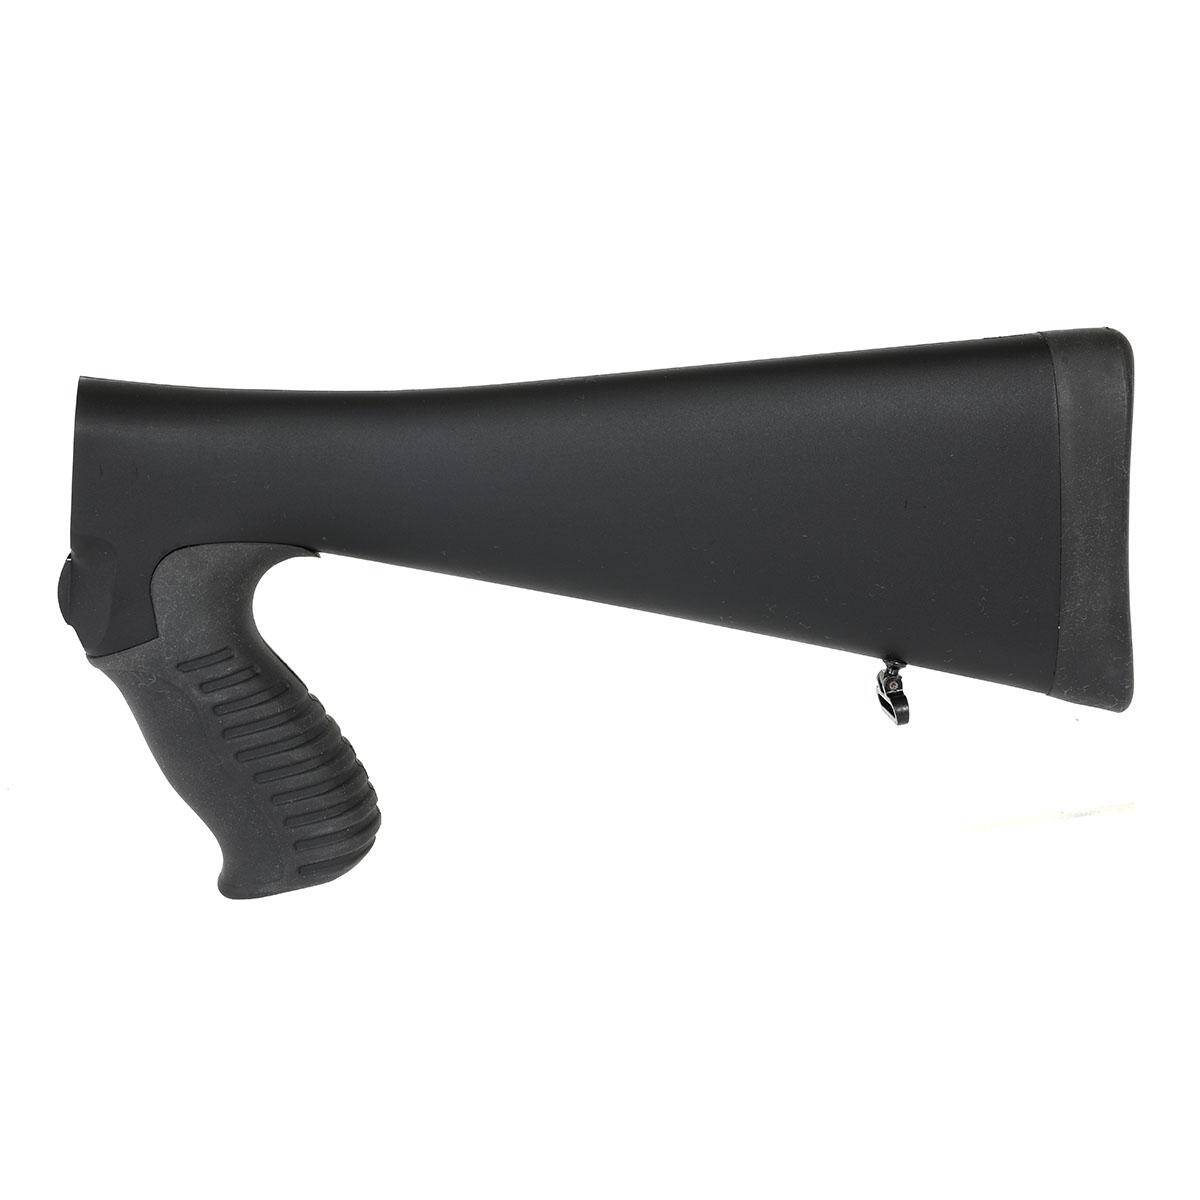 Armsan Synthetic Shotgun Stock with Pistol Grip